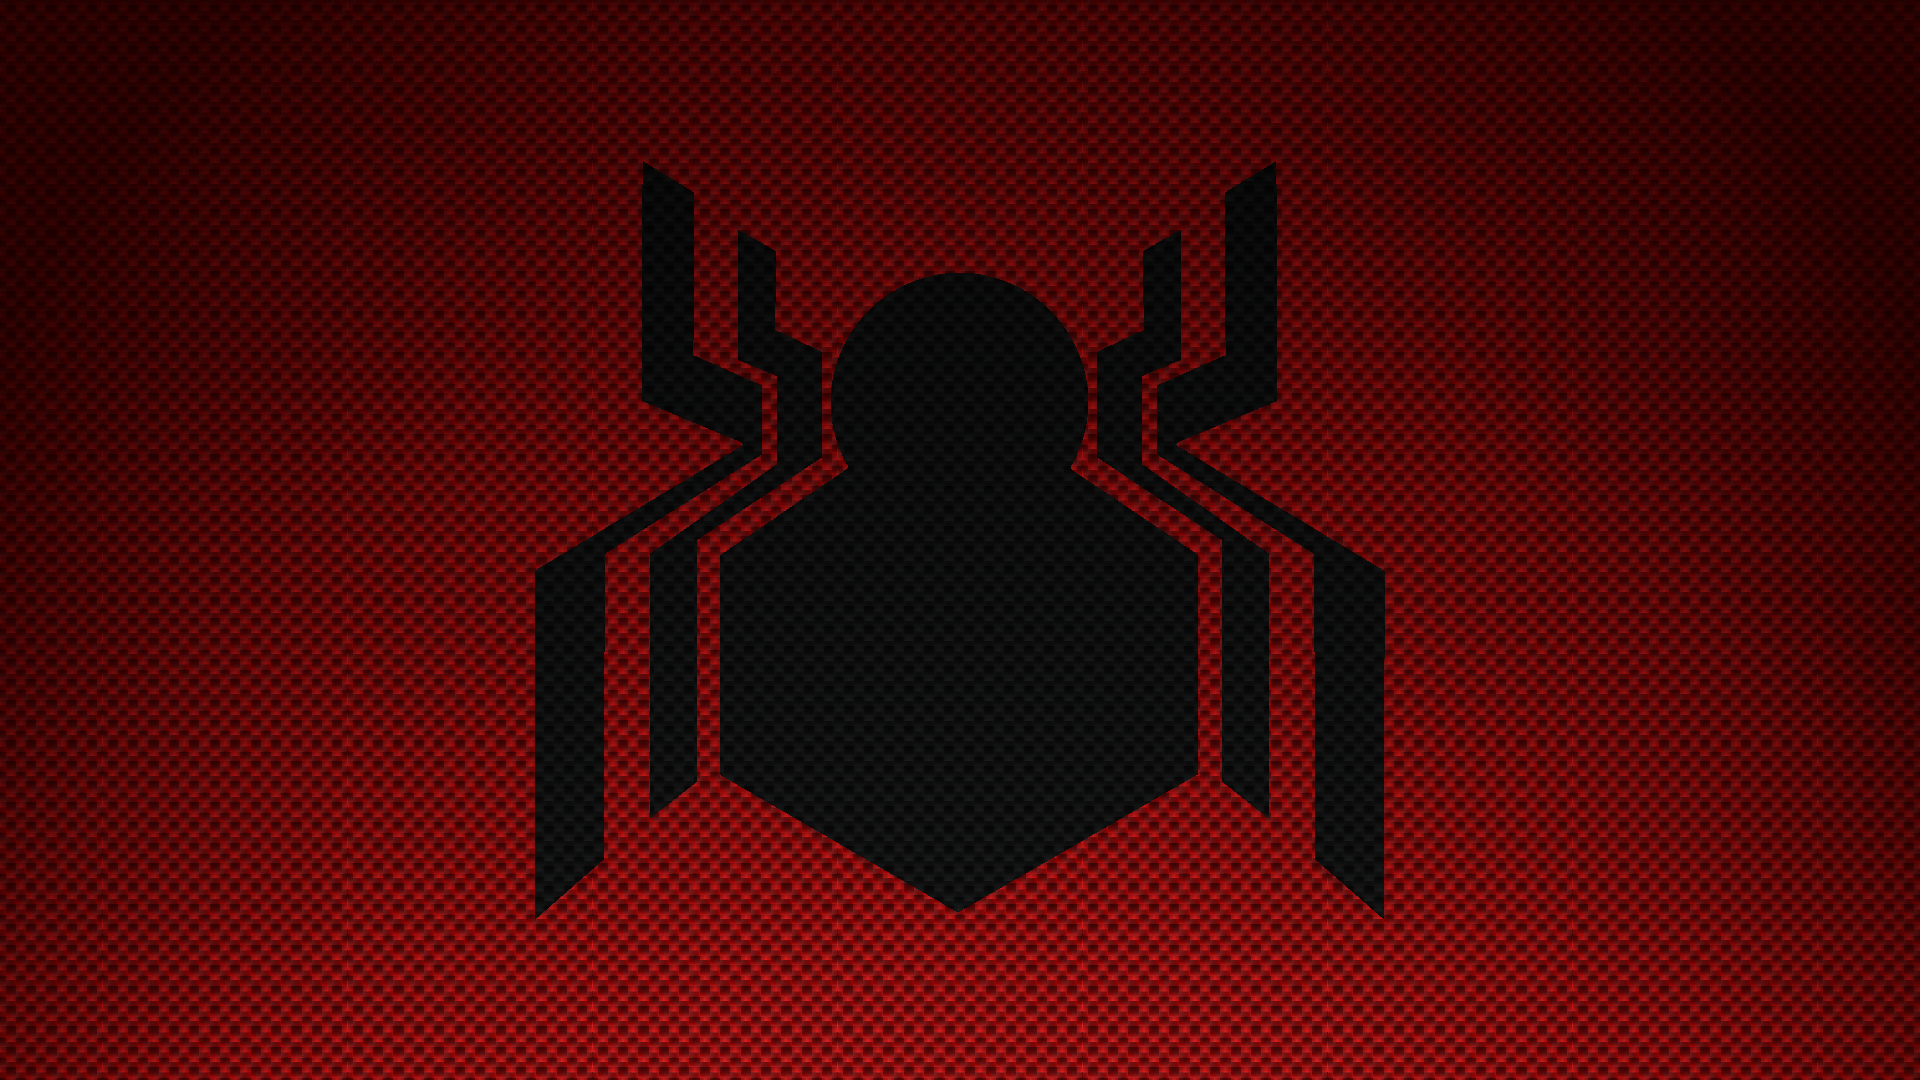 Made A Simple MCU Spider Man Logo Wallpaper